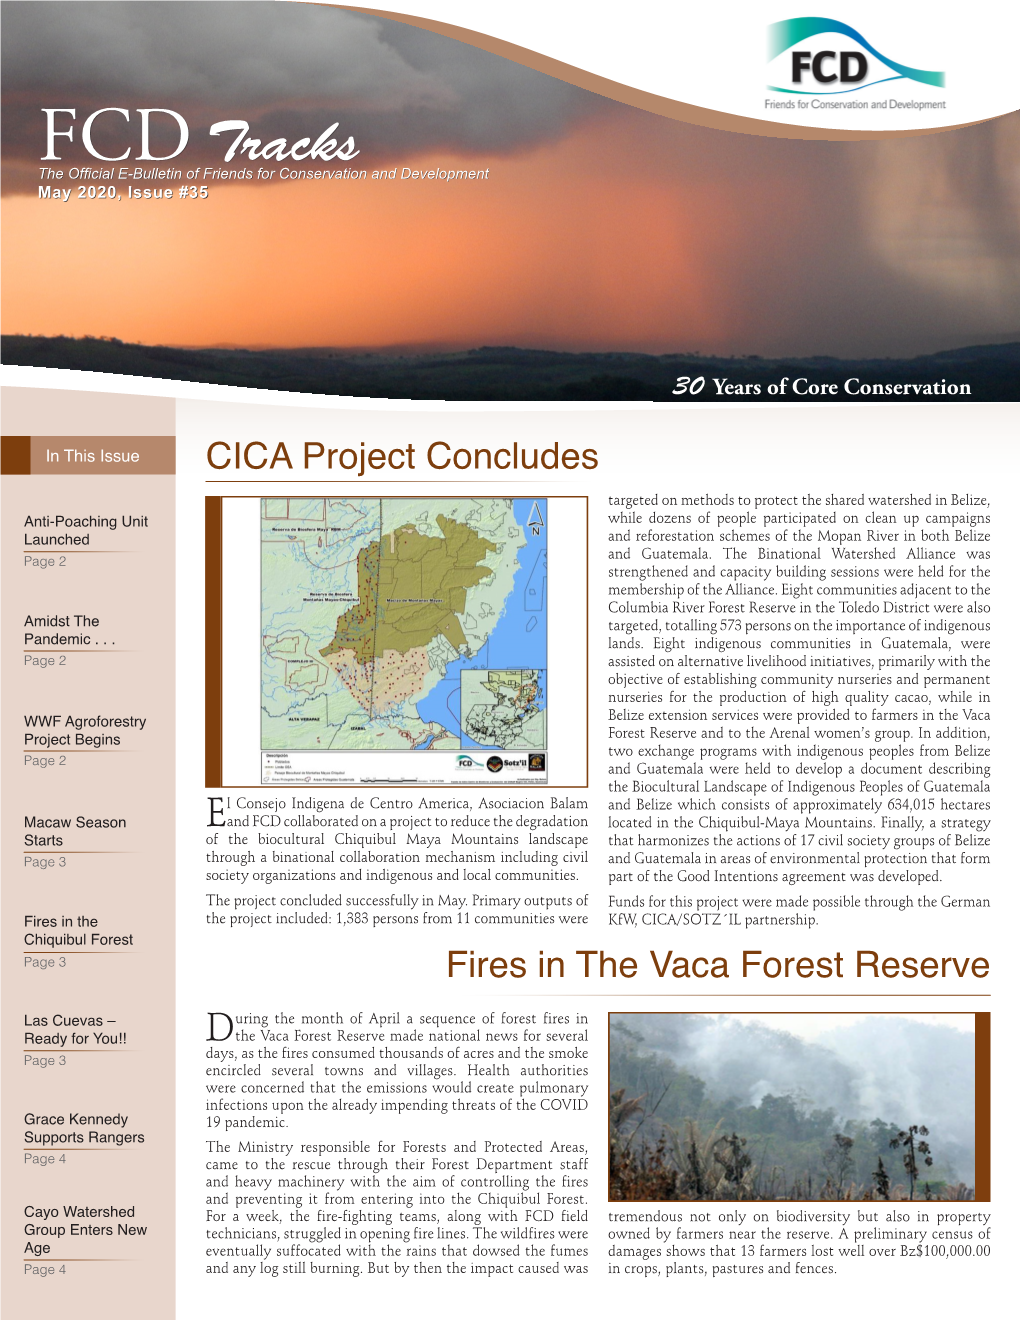 FCD Newsletter Issue 35